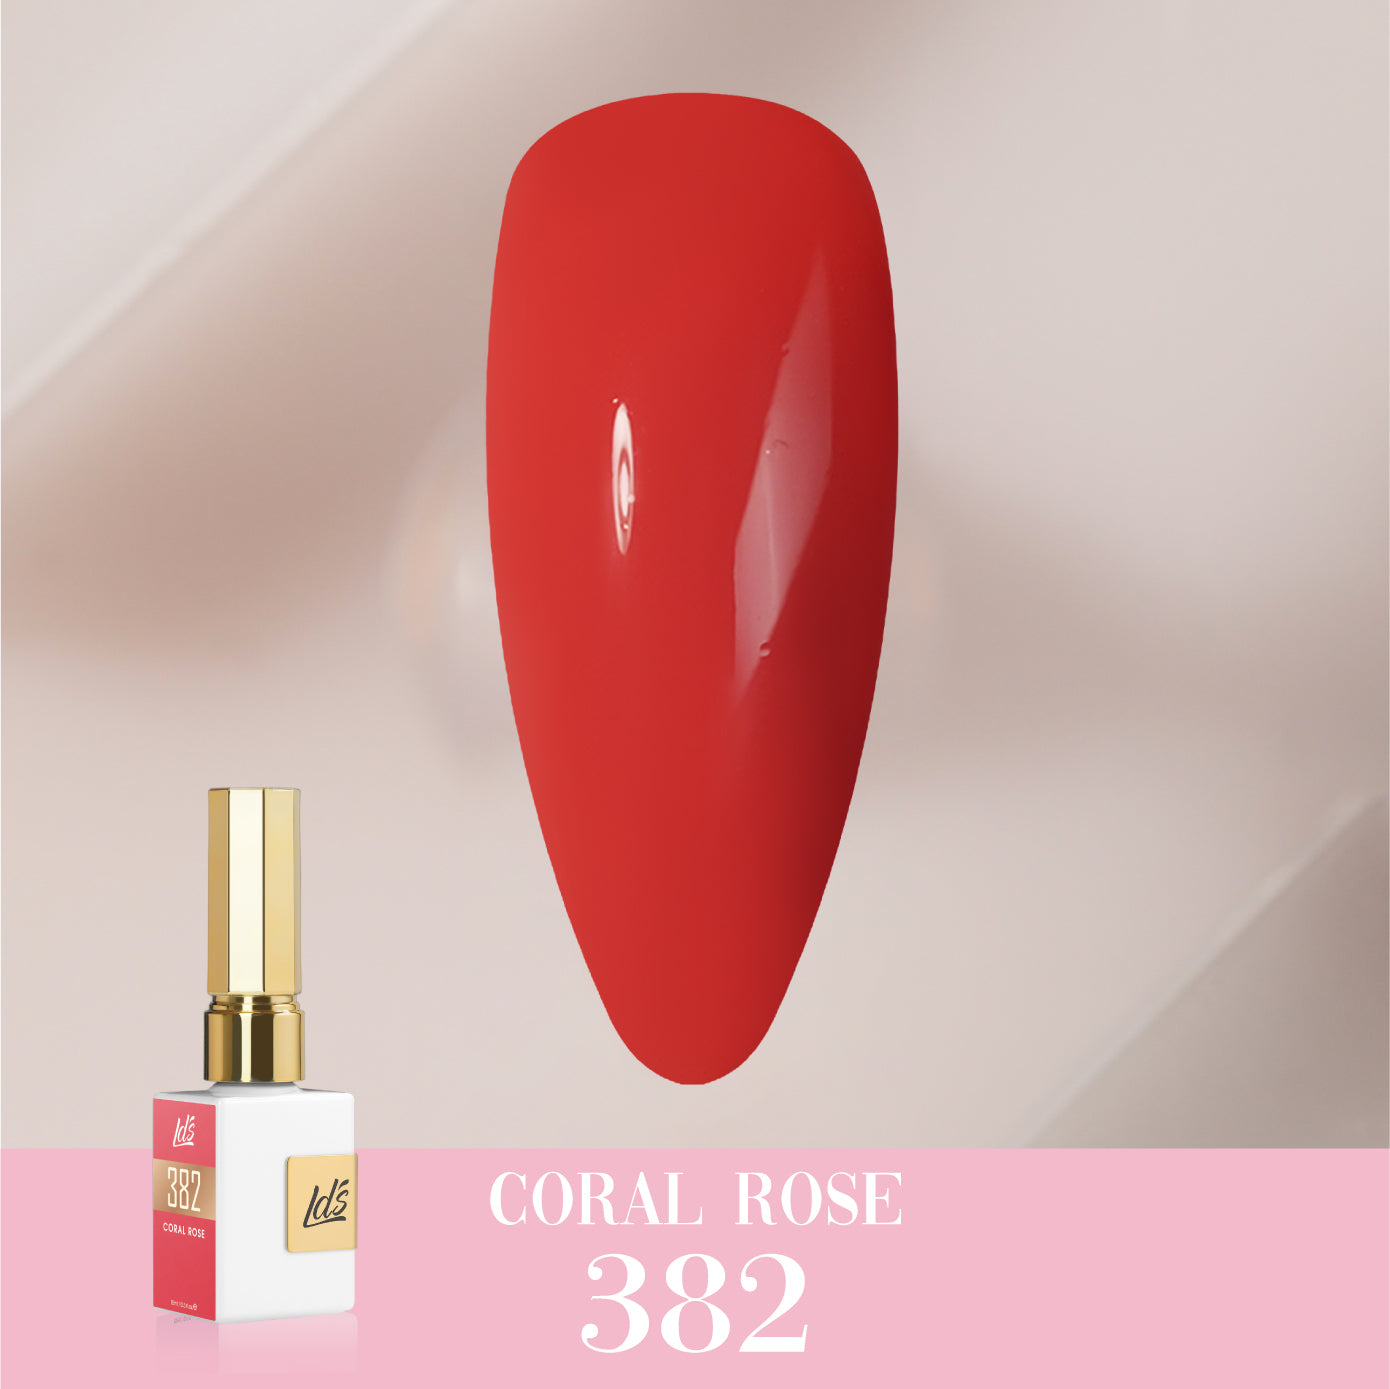 LDS Color Craze Collection - 382 Coral Rose - Gel Polish 0.5oz